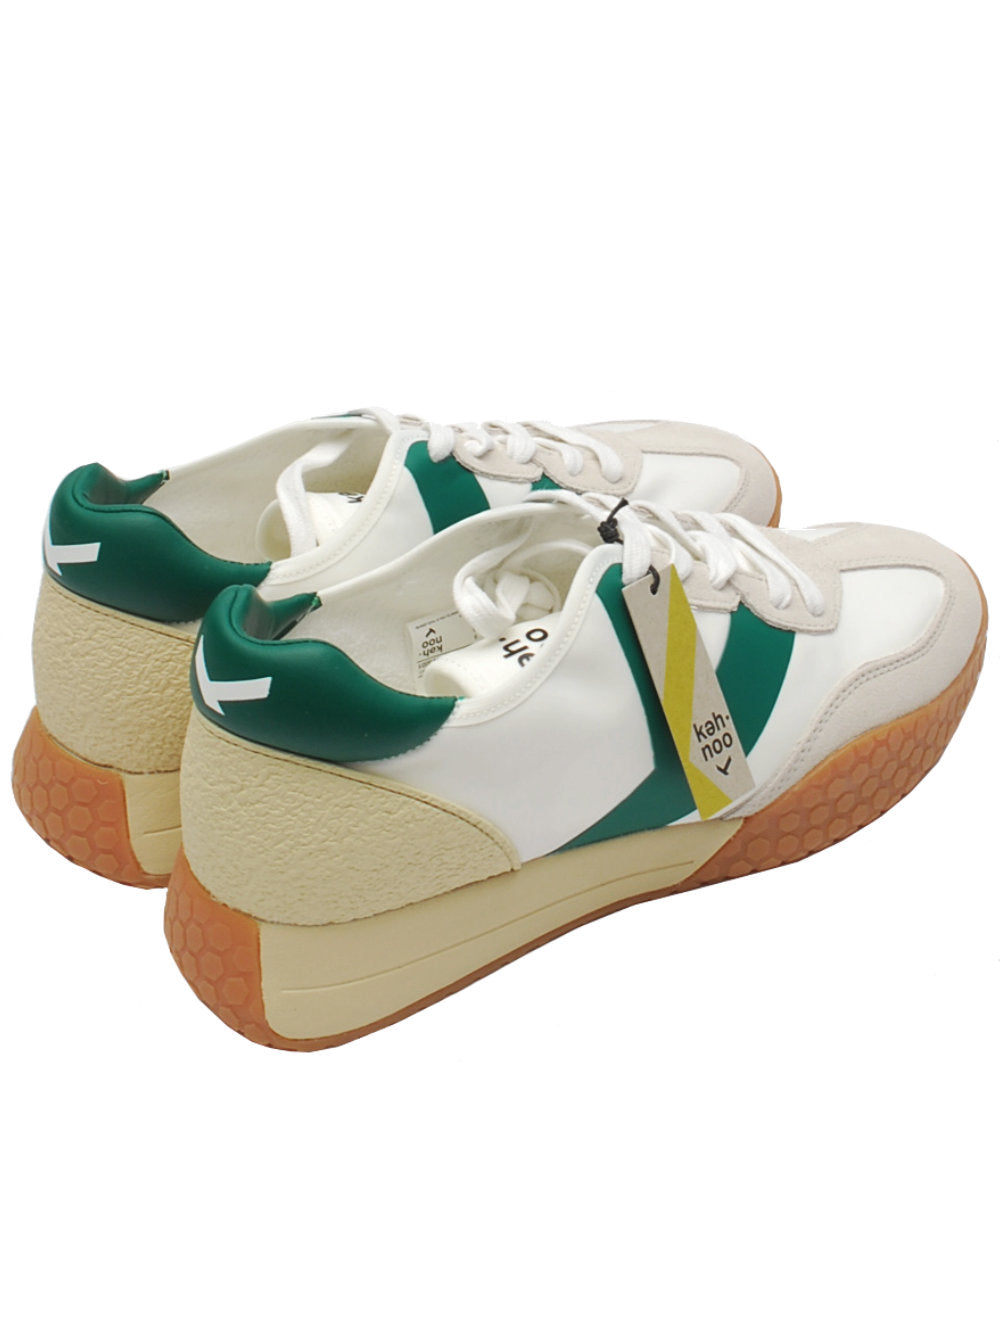 Kehnoo sneaker 9313 verde e bianco pe24